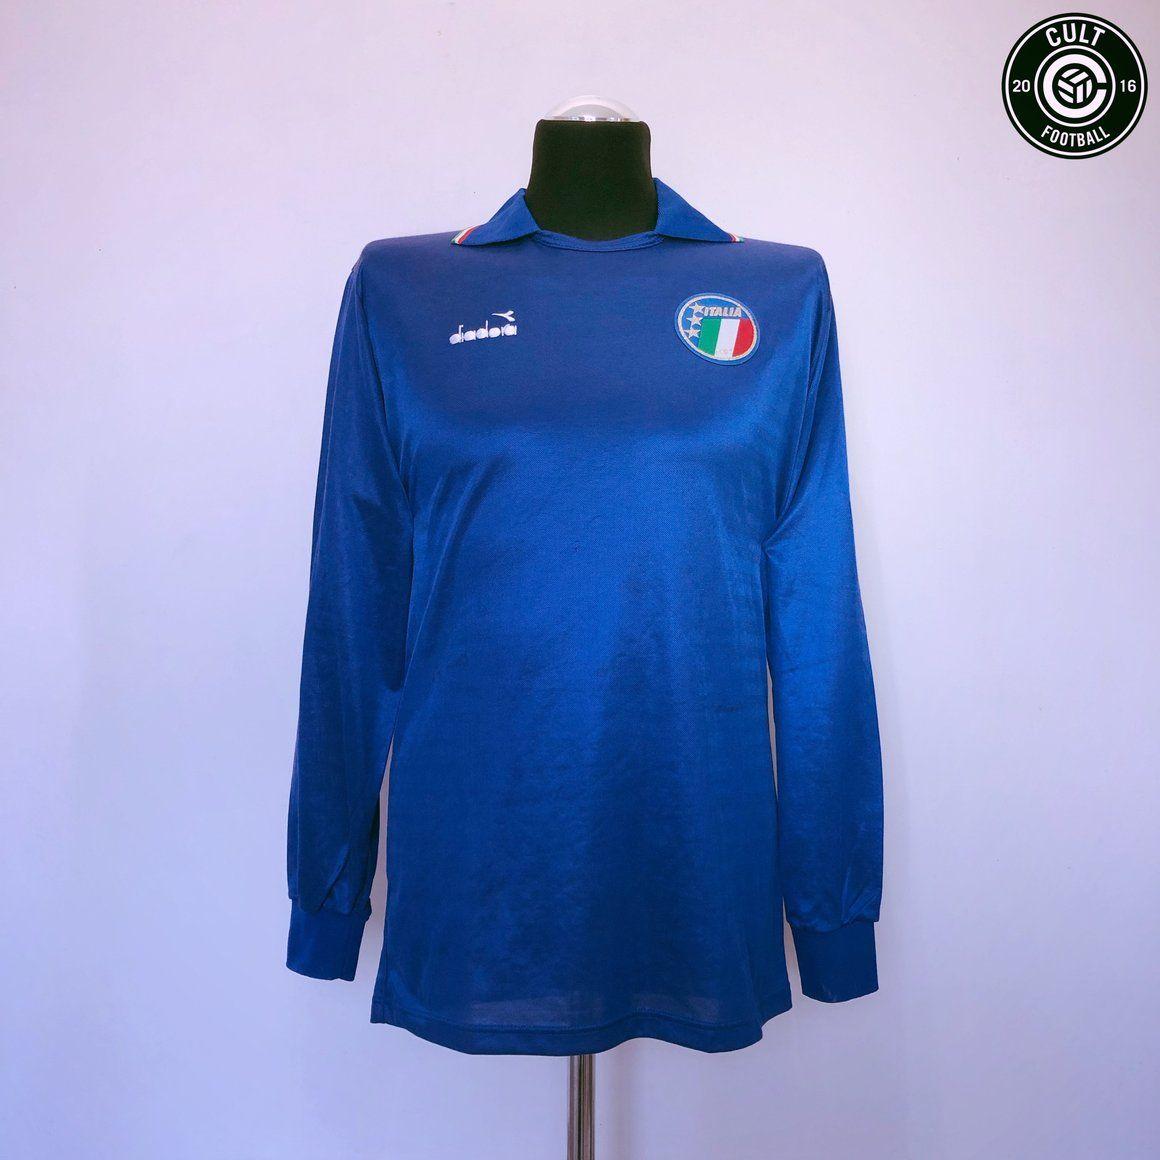 Old Diadora Logo - 1986/88 ITALY Diadora Vintage Football Training Shirt Jersey ...